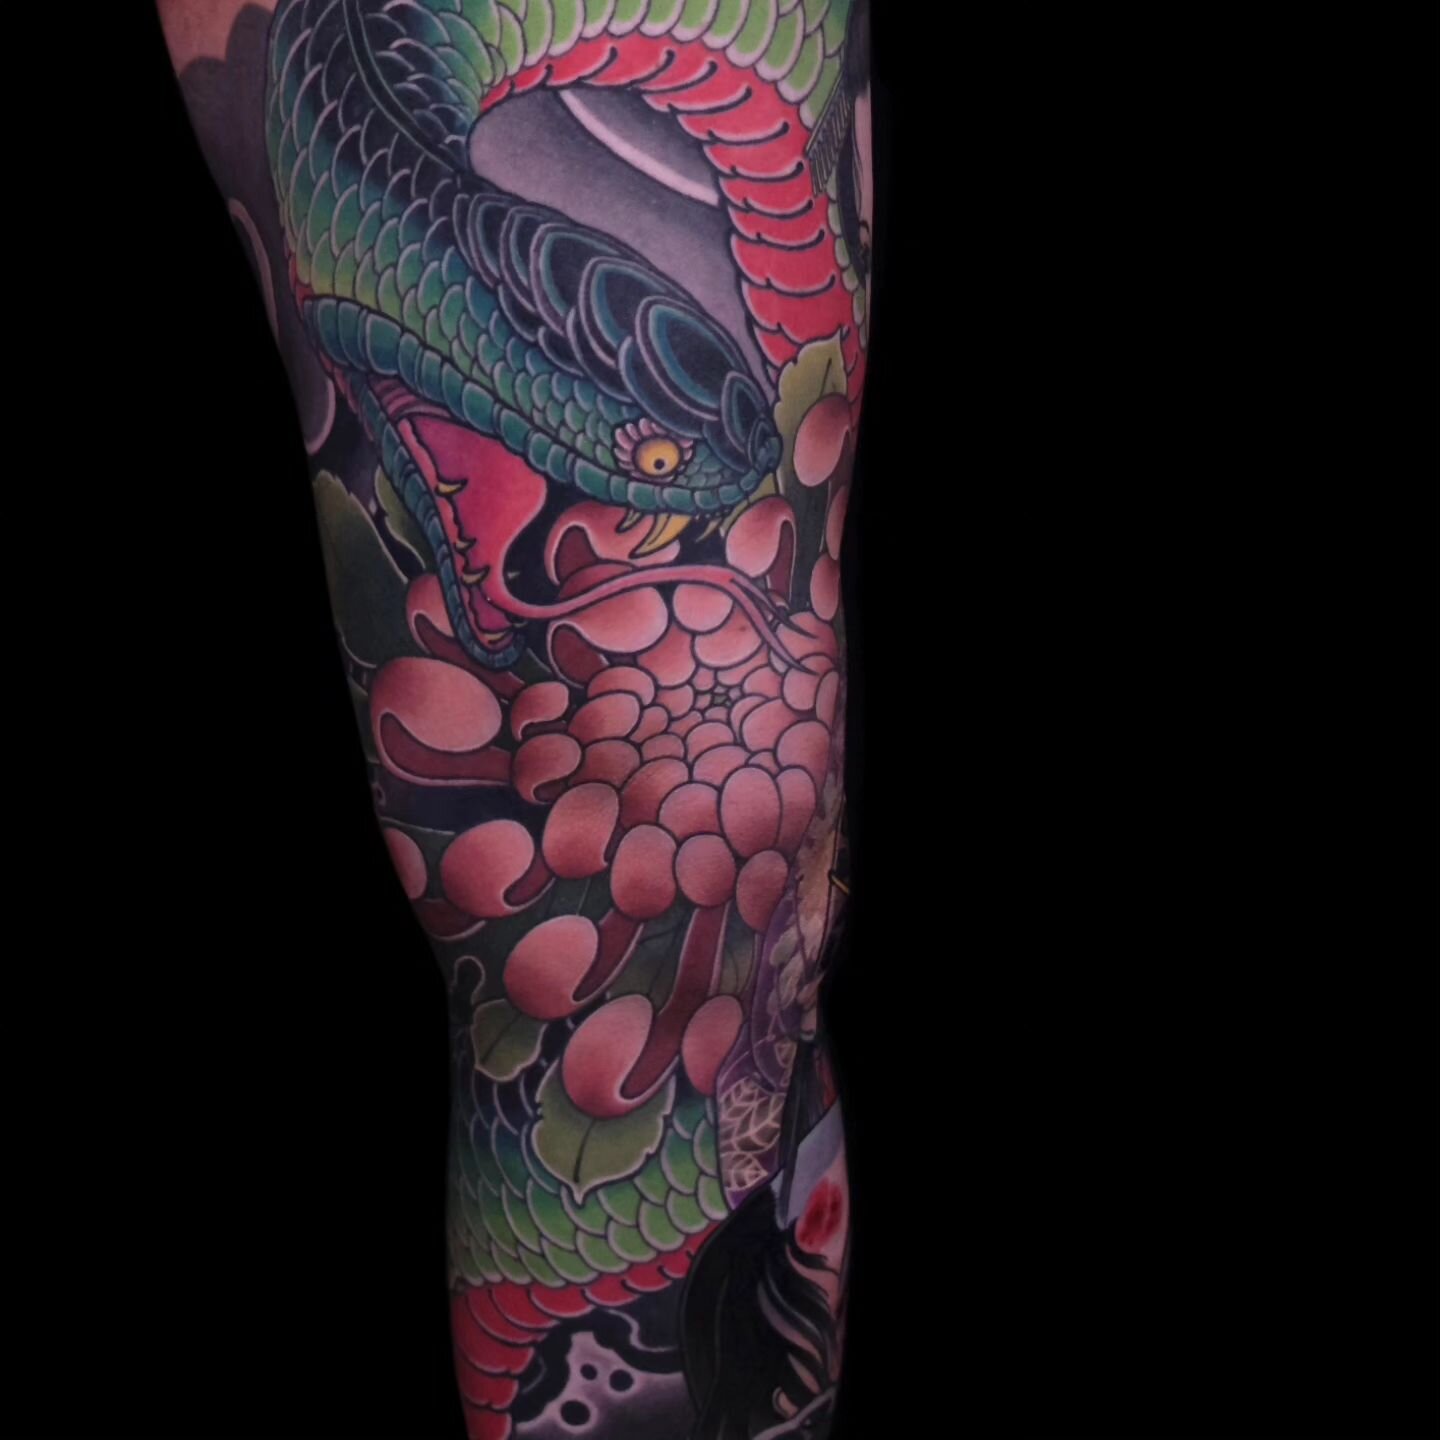 A Japanese leg sleeve tattoo done by @wildmonkey_katsu . Swipe to see the details 👉

#japanesetattoo #japaneseart #legsleevetattoo #snaketattoo #chrysanthemum #wildmonkeytattoo #namakubitattoo #japanesetraditionaltattoo #gouda #netherlands